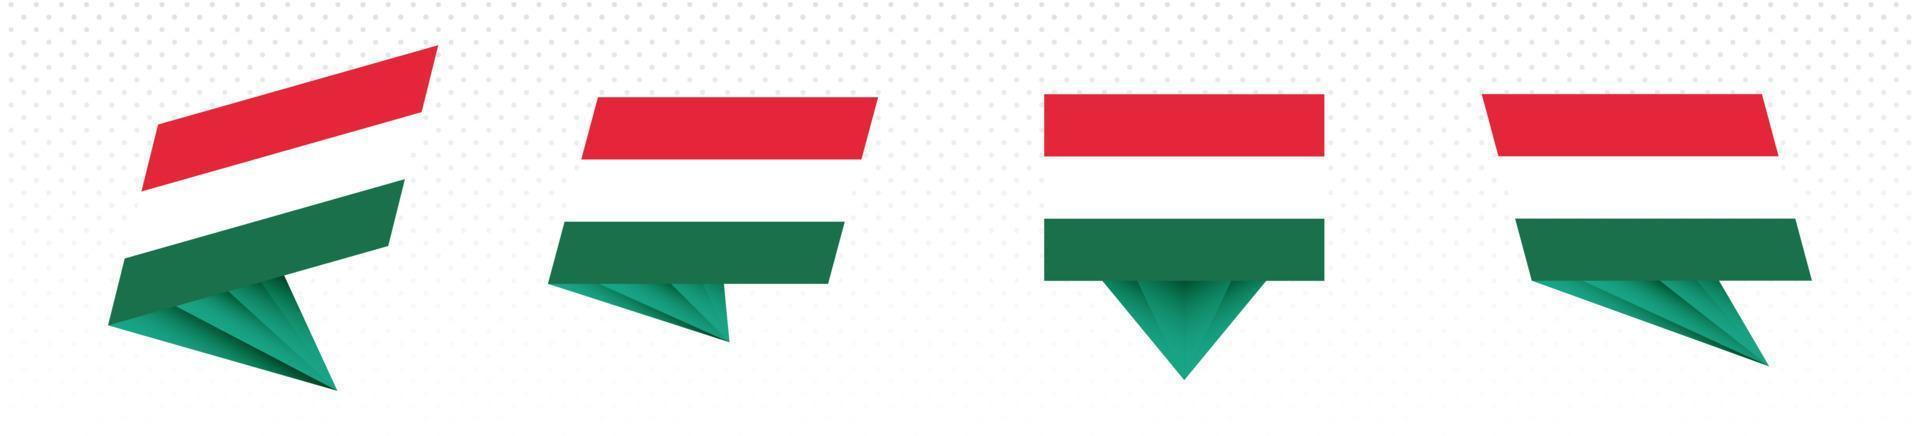 bandeira da Hungria em design abstrato moderno, conjunto de bandeiras. vetor